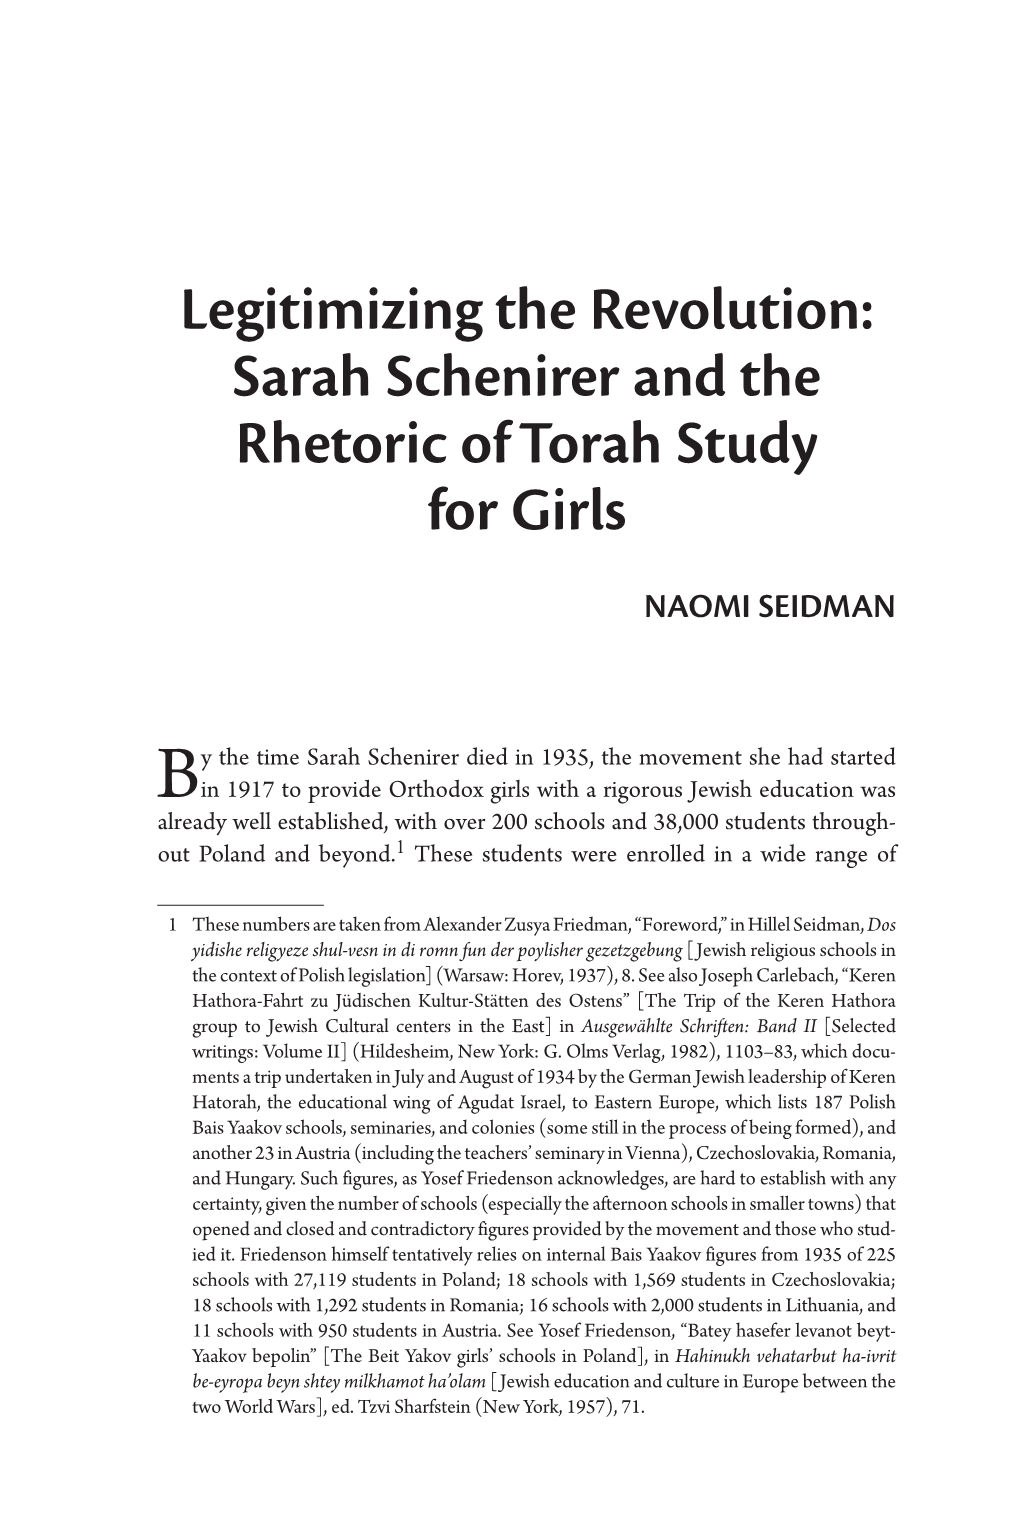 Sarah Schenirer and the Rhetoric of Torah Study for Girls